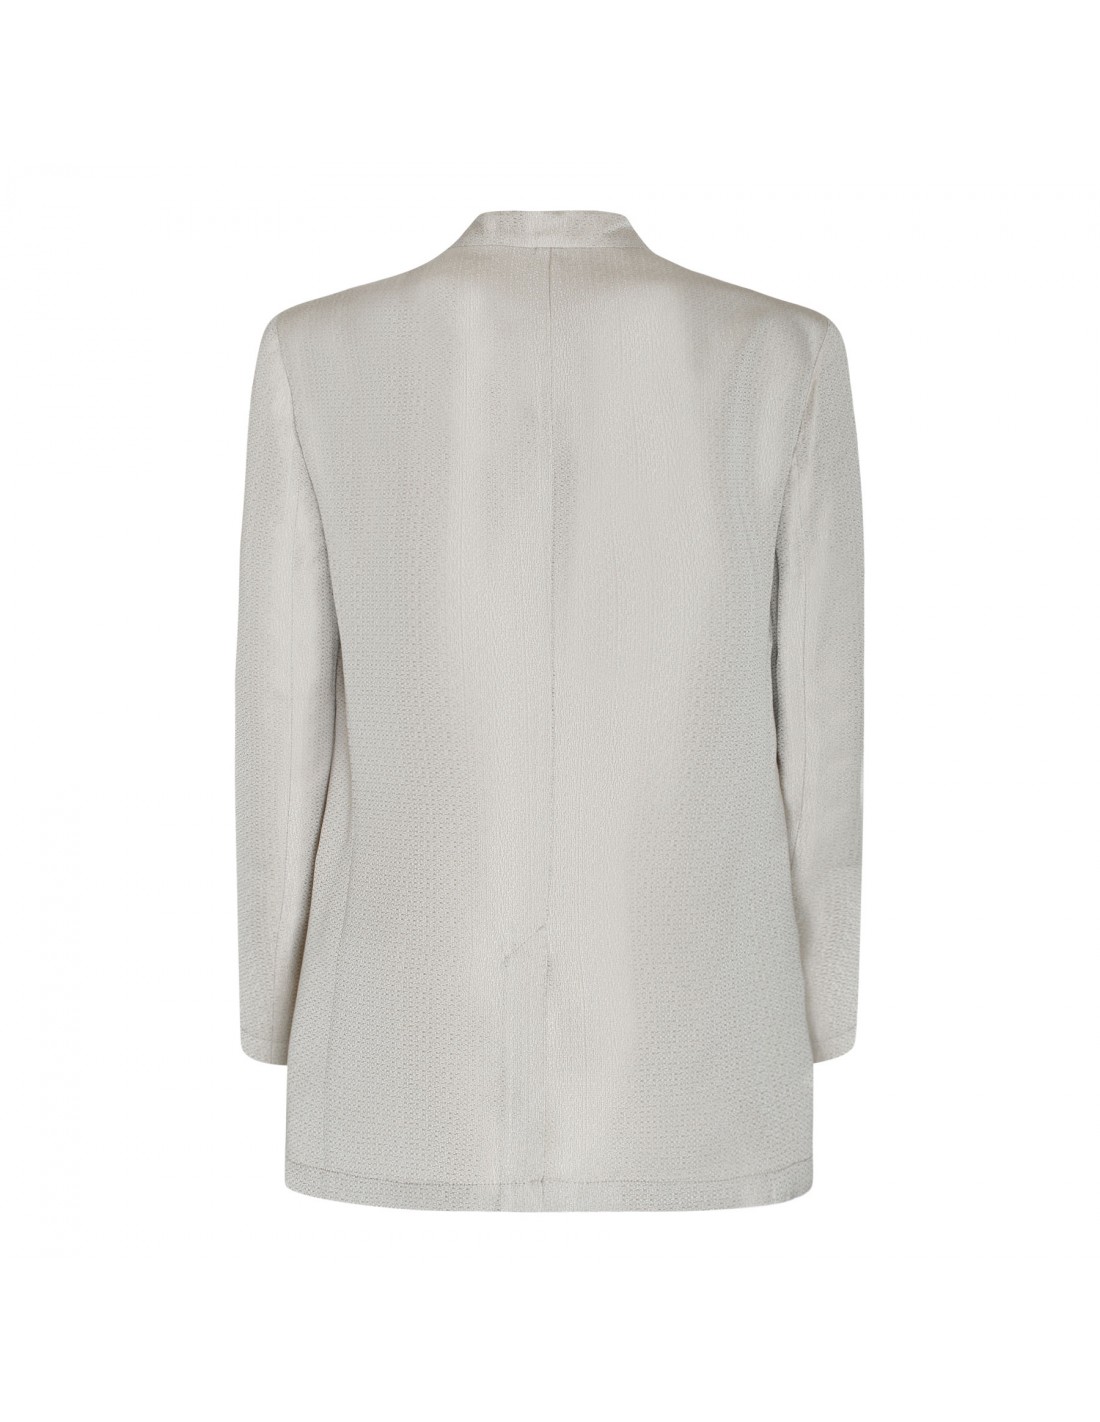 Chalk white jacquard jacket